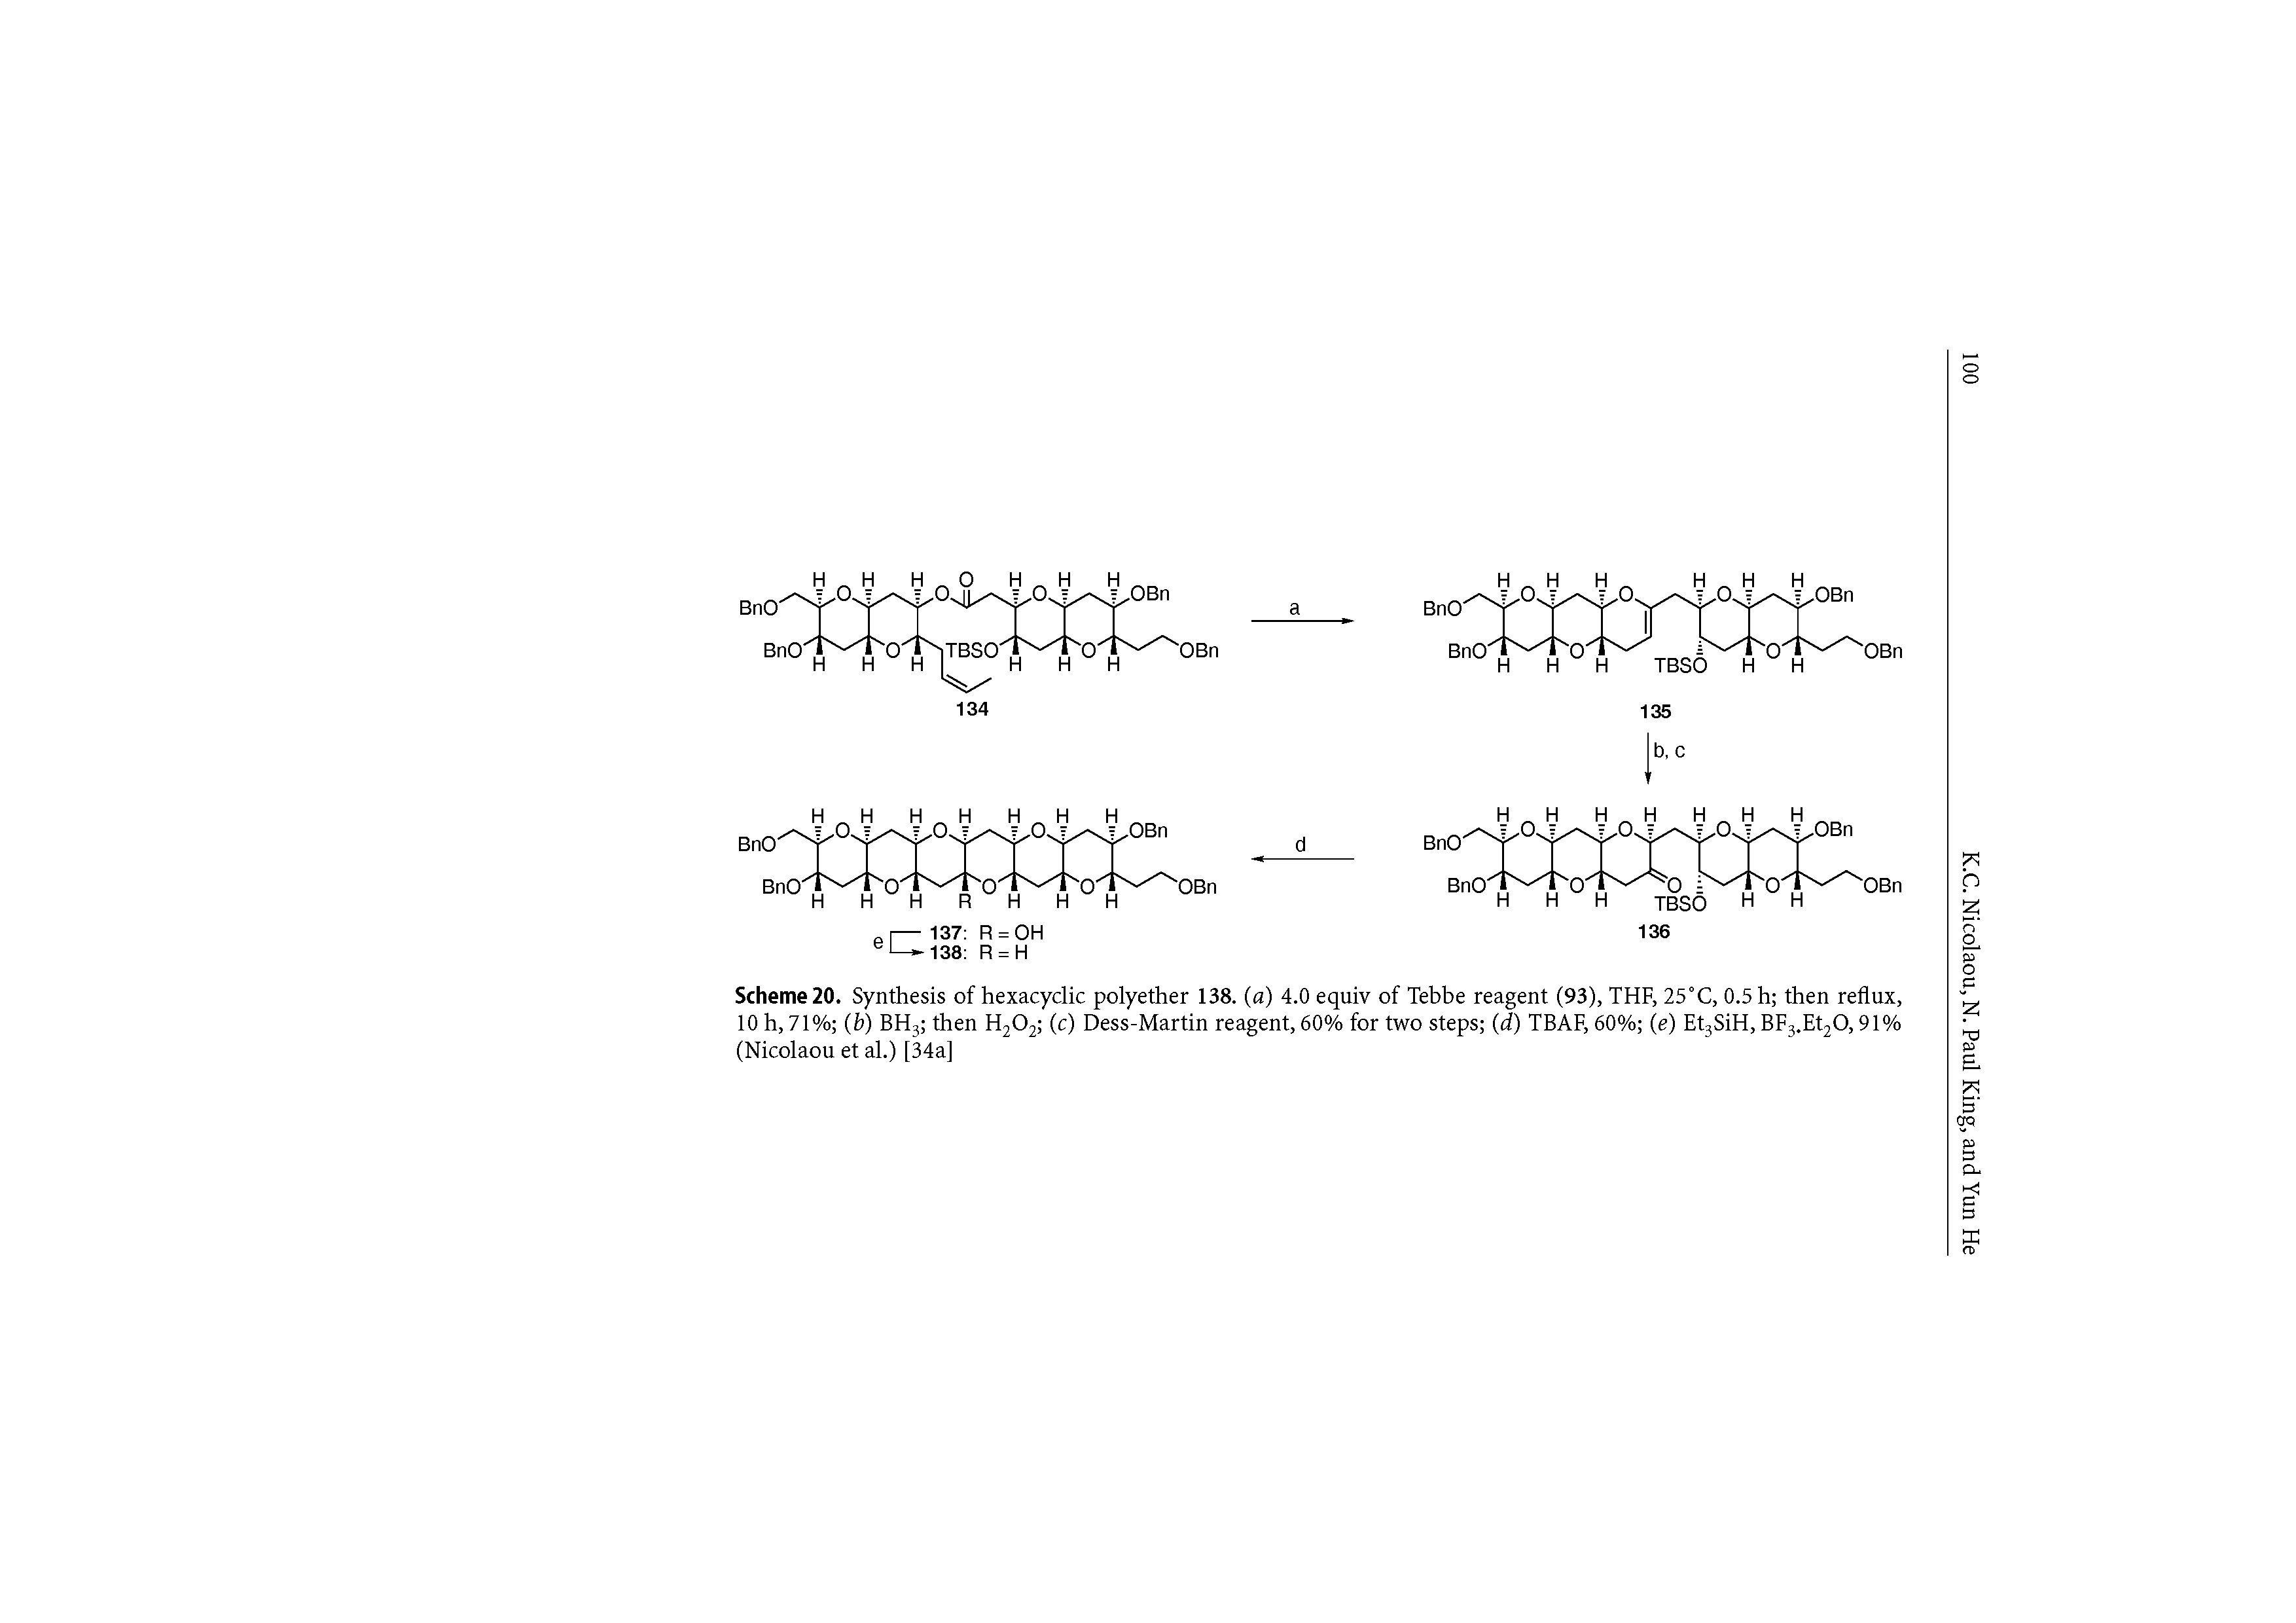 Scheme 20. Synthesis of hexacyclic polyether 138. (a) 4.0 equiv of Tebbe reagent (93), THF, 25 °C, 0.5 h then reflux, 10 h, 71% (b) BH3 then H202 (c) Dess-Martin reagent, 60% for two steps (d) TBAF, 60% (e) Et3SiH, BF3.Et20,91% (Nicolaou et al.) [34a]...